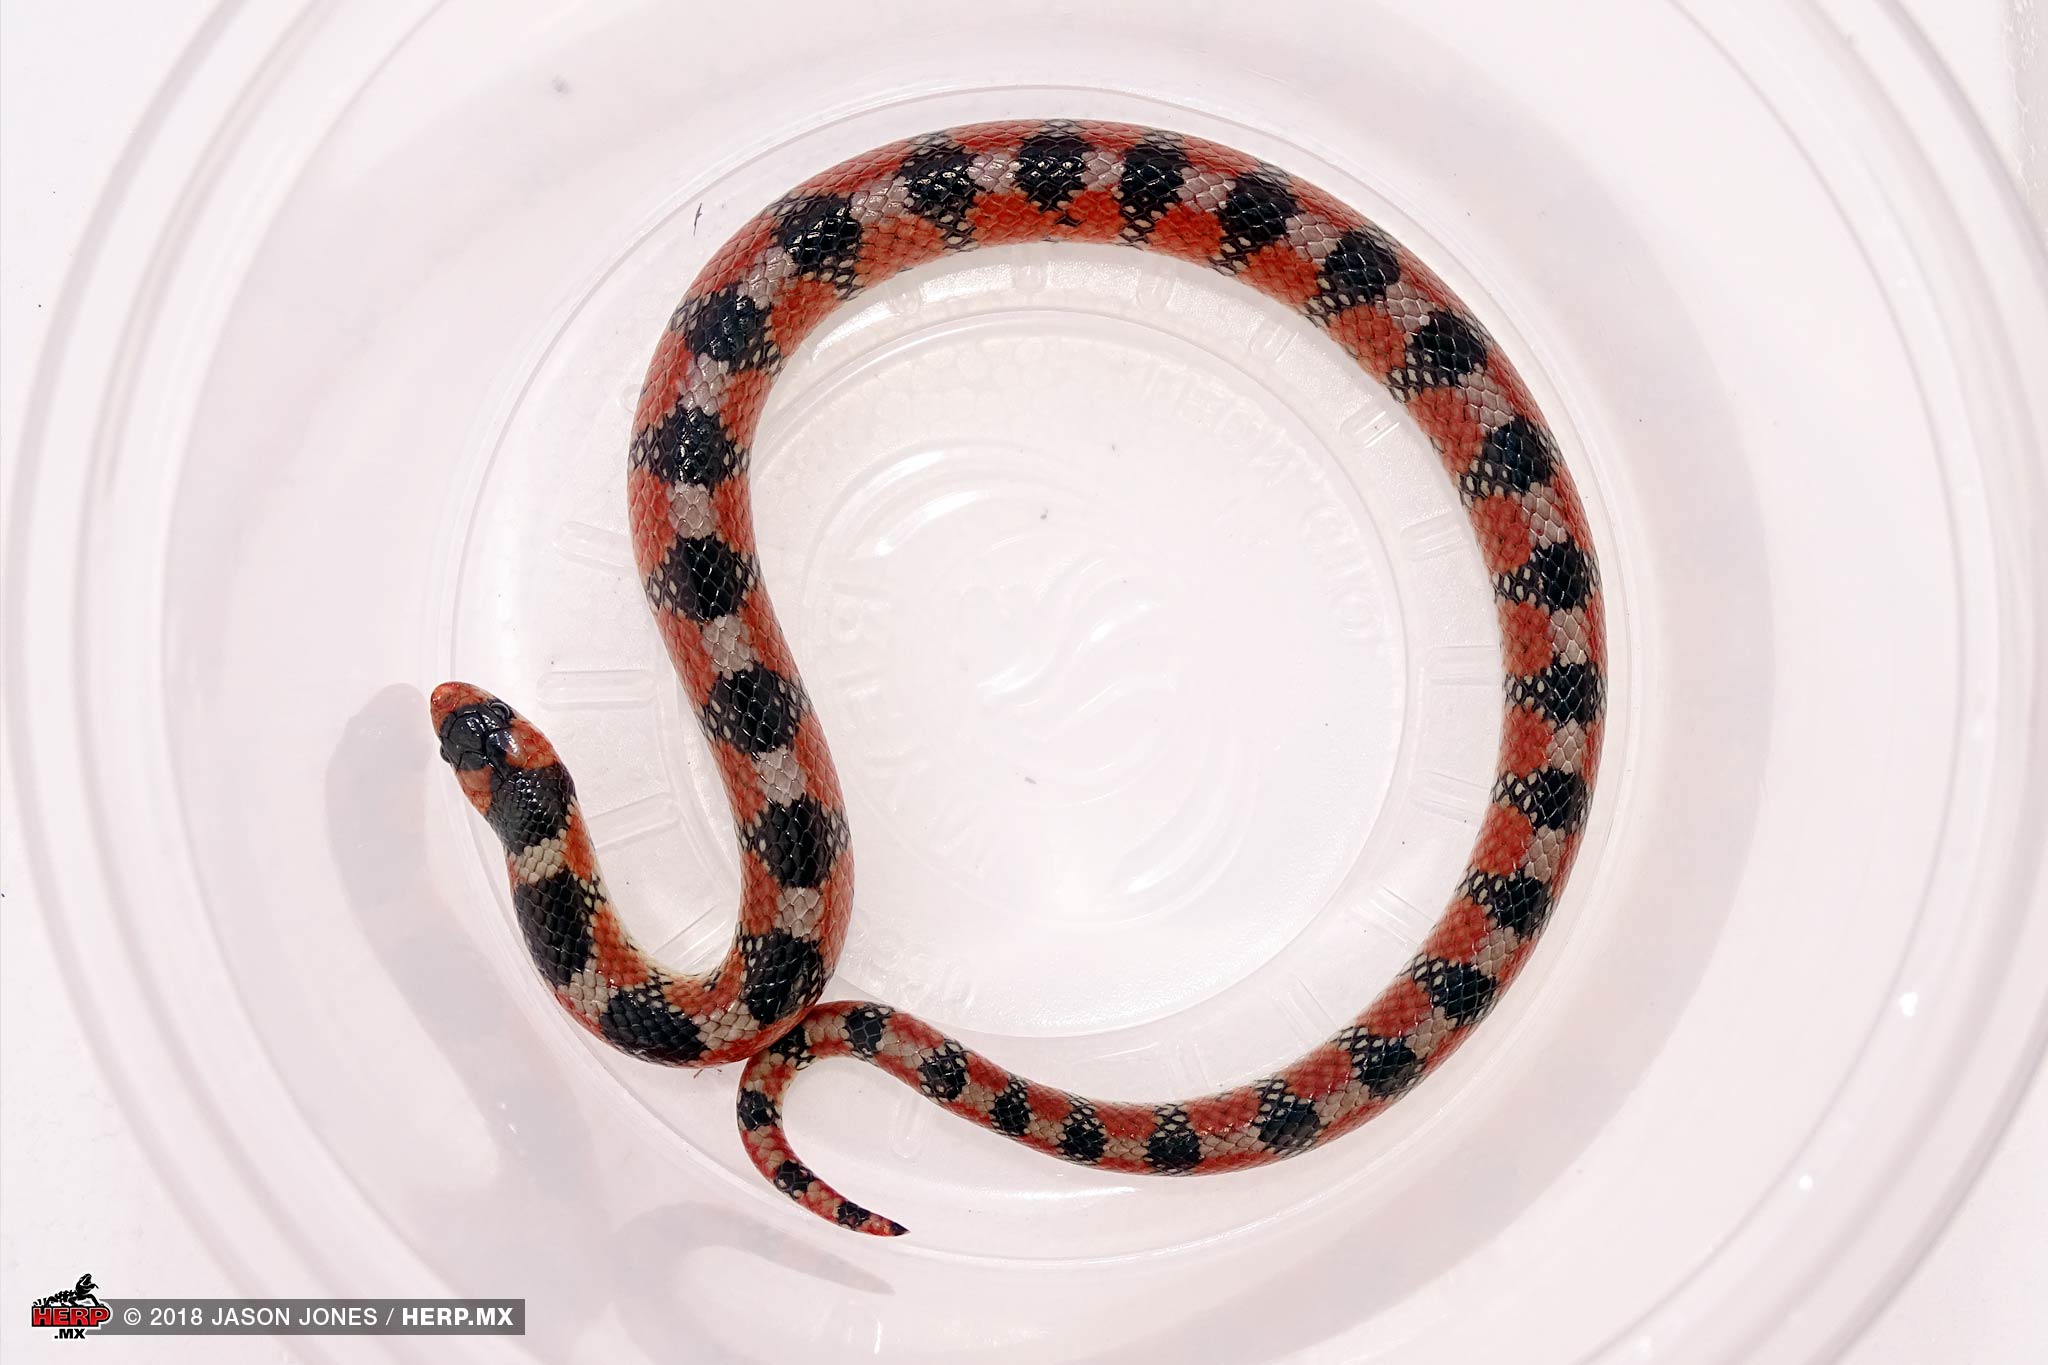 Thornscrub Hooknose Snake (<em>Gyalopion quadrangulare</em>) <br />© Jason Jones / HERP.MX